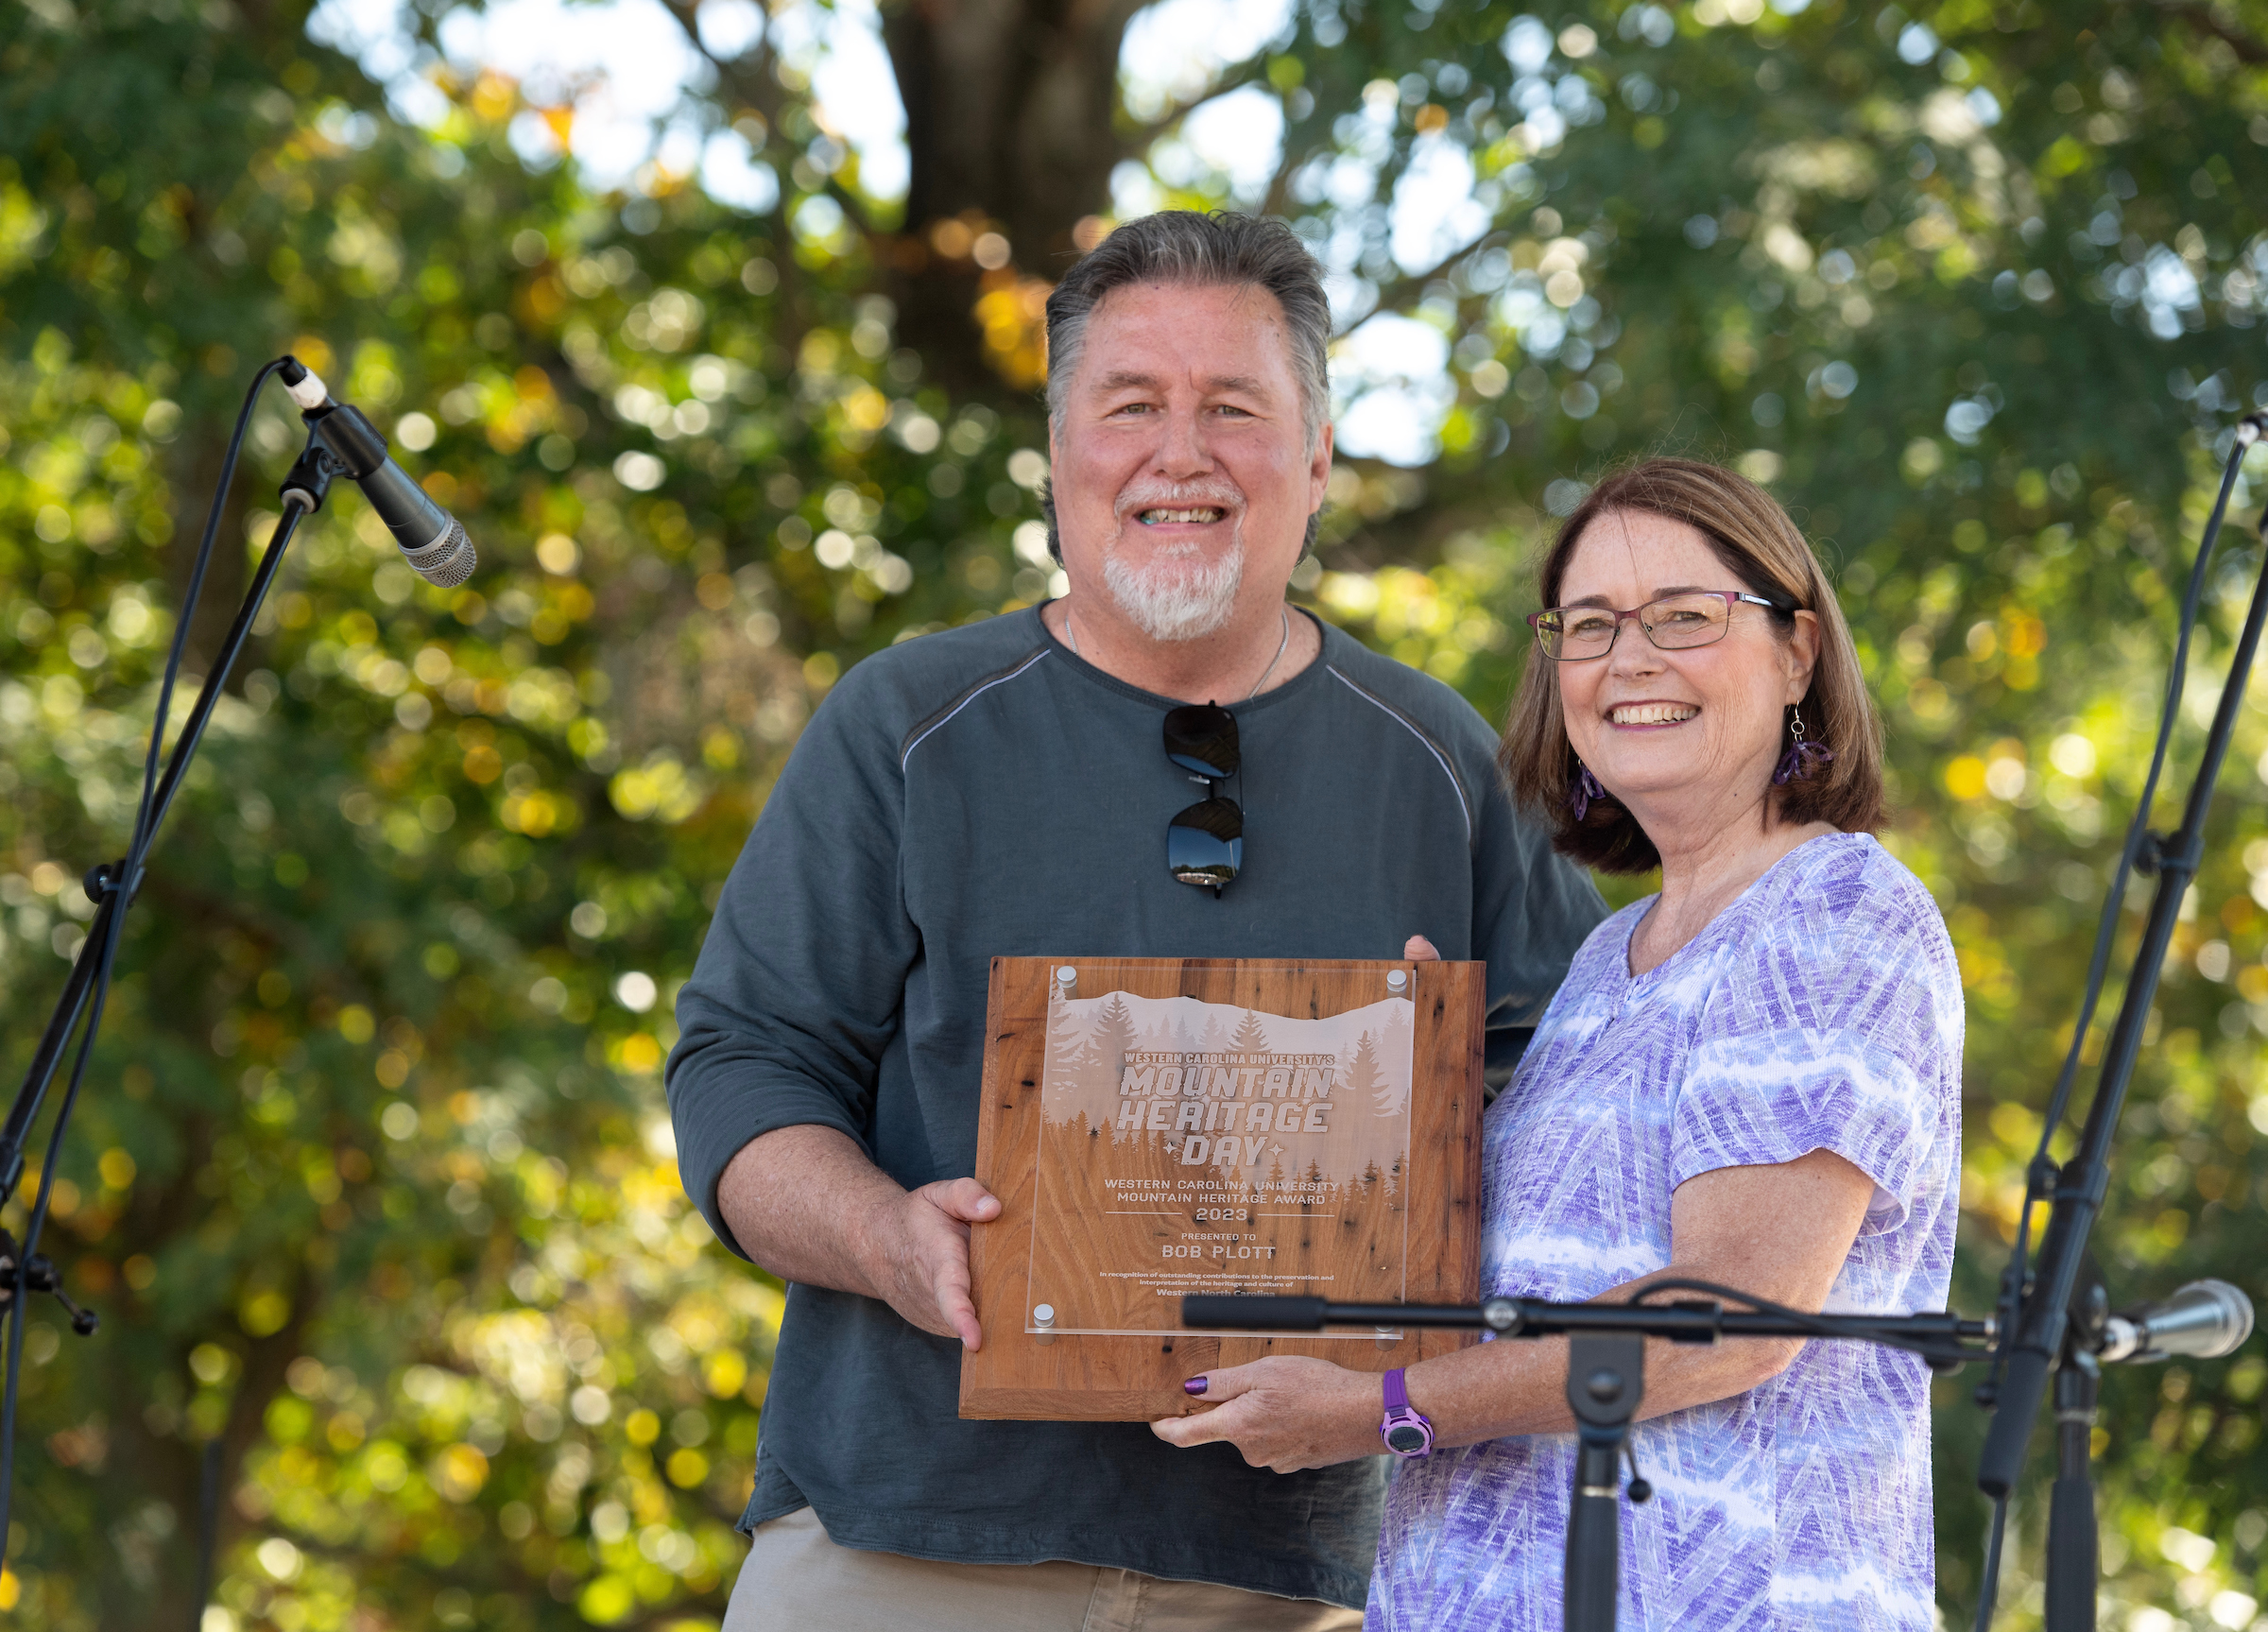 Bob Plott receives award from Dr. Kelli Brown